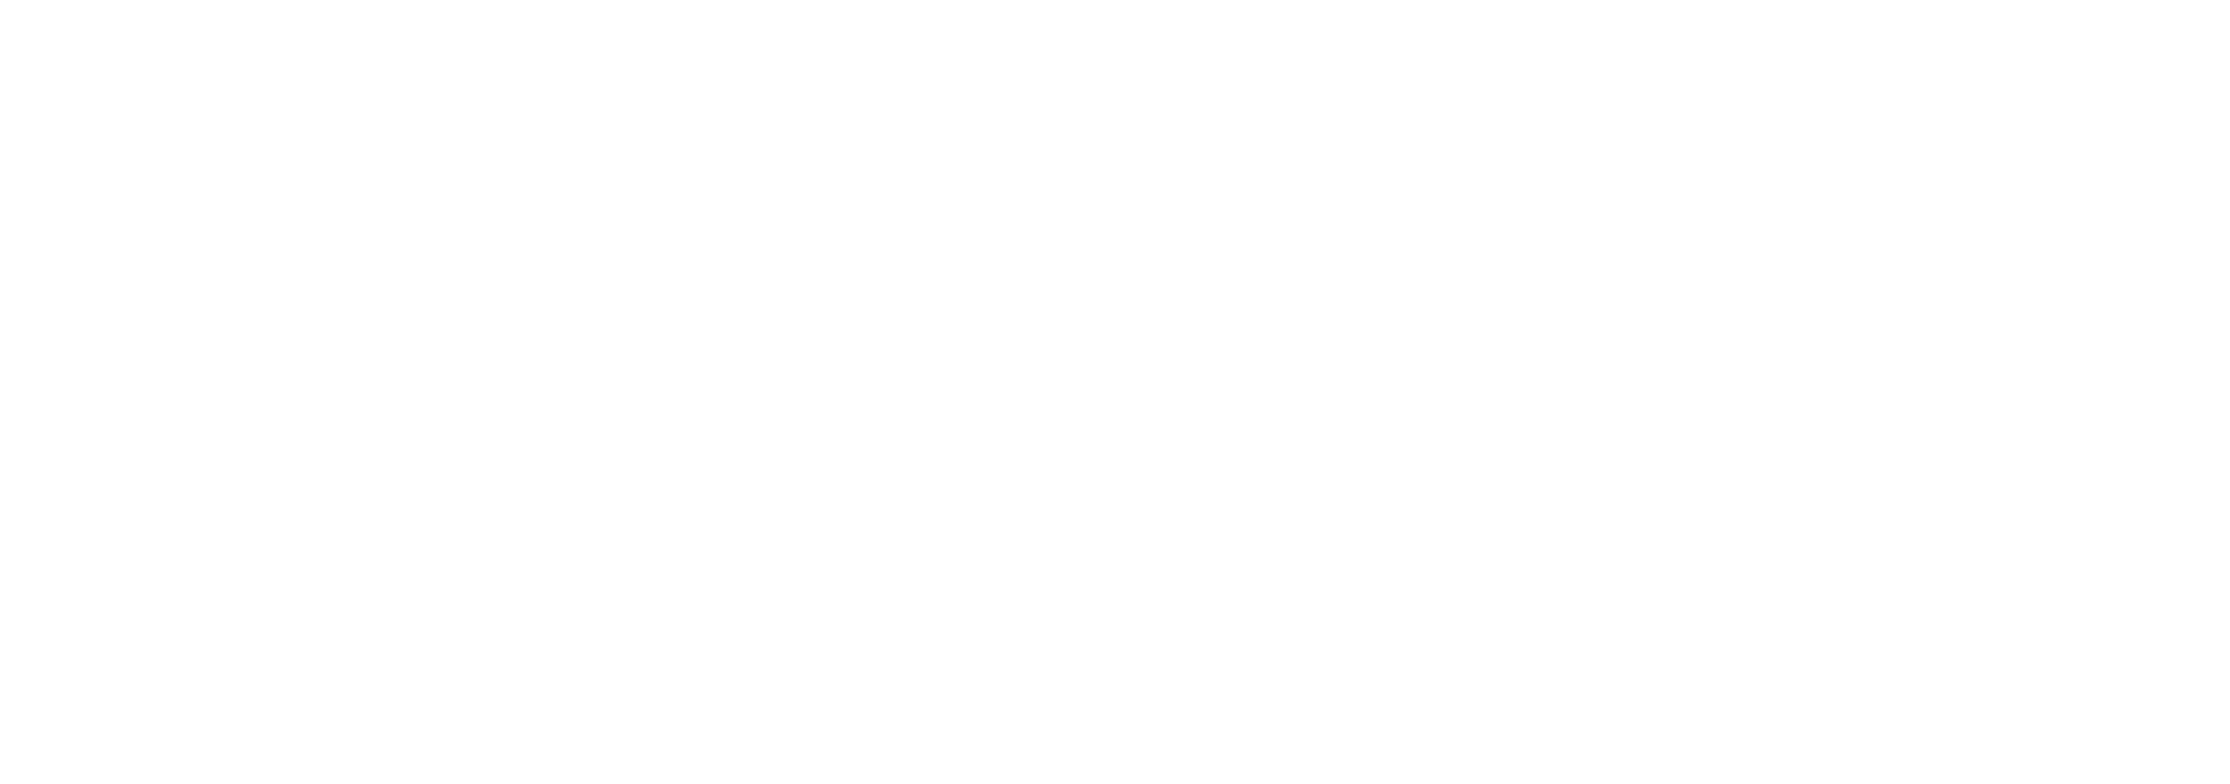 Registered with Fundraising Regulator